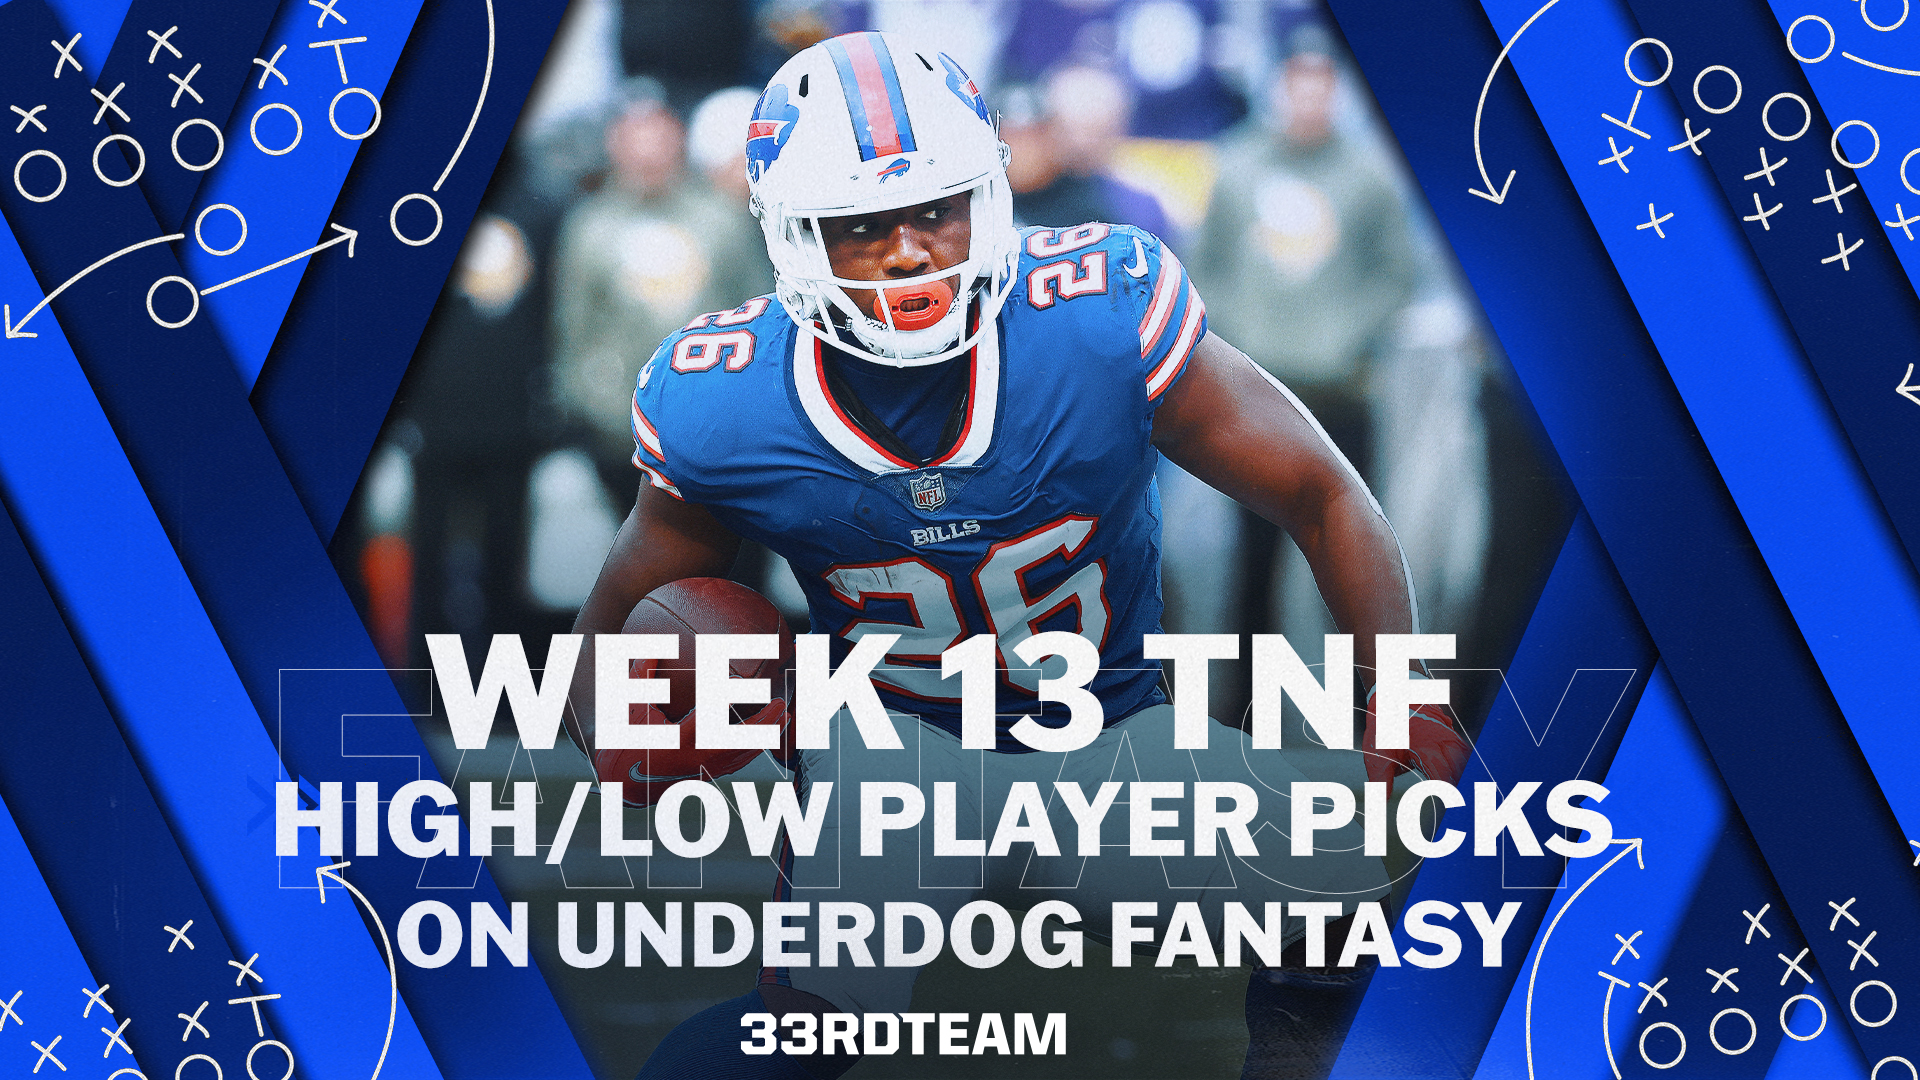 NFL Week 13 Underdog Fantasy High/Low Picks for Bills vs. Patriots